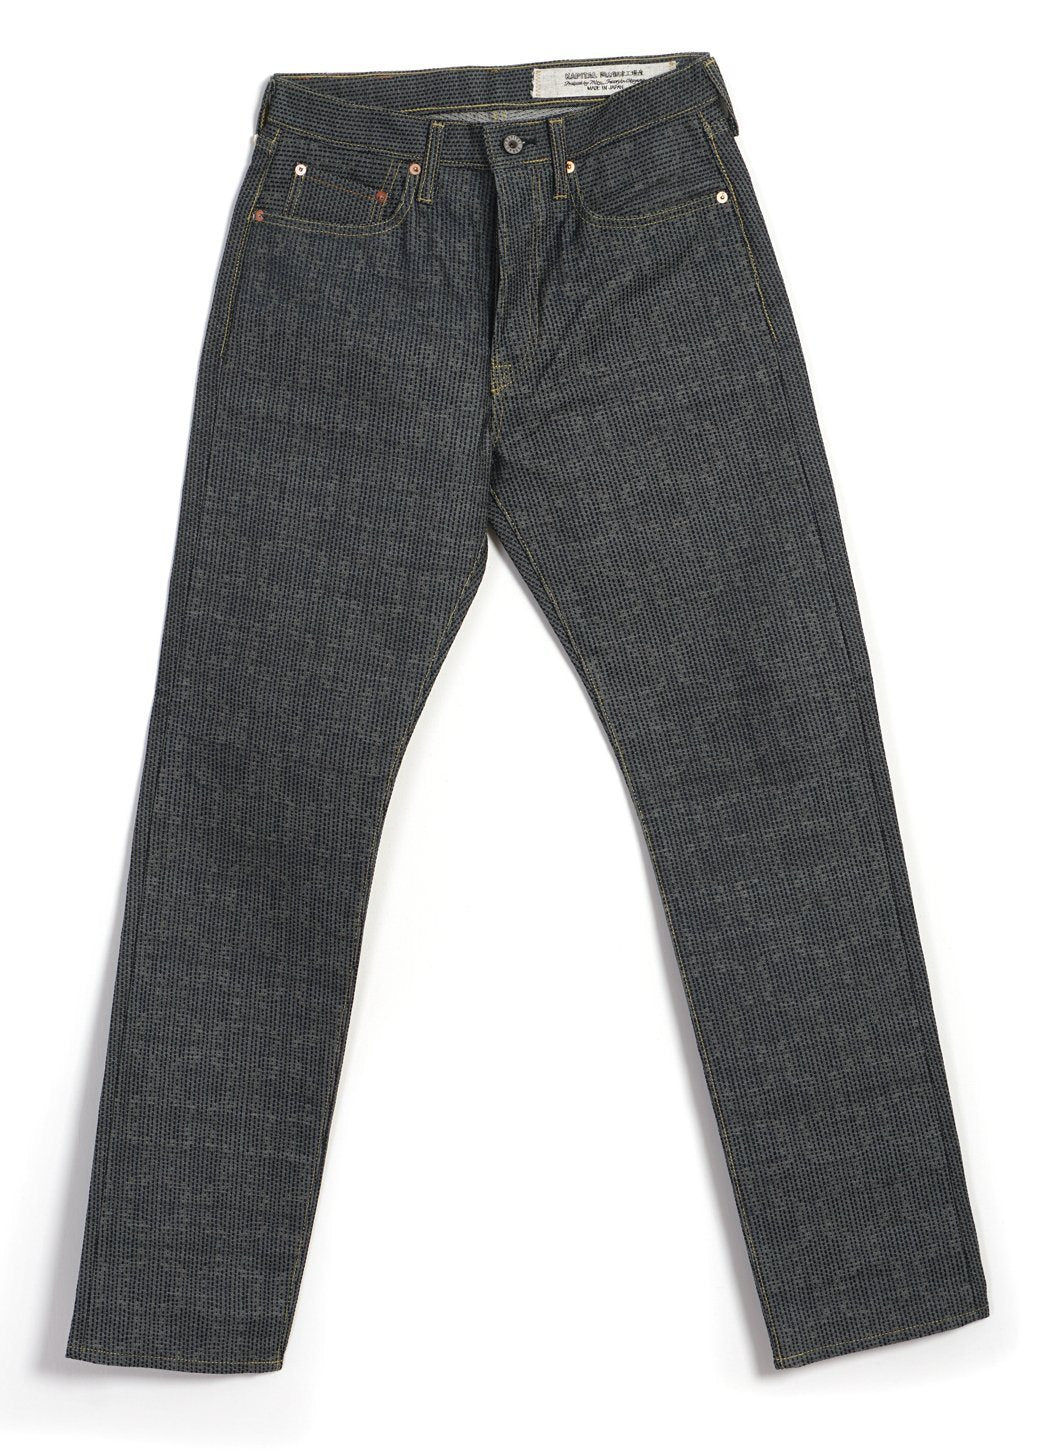 KAPITAL - CENTURY DENIM MONKEY CISCO | Sashiko 5P Jeans | N7S(Silver) - HANSEN Garments